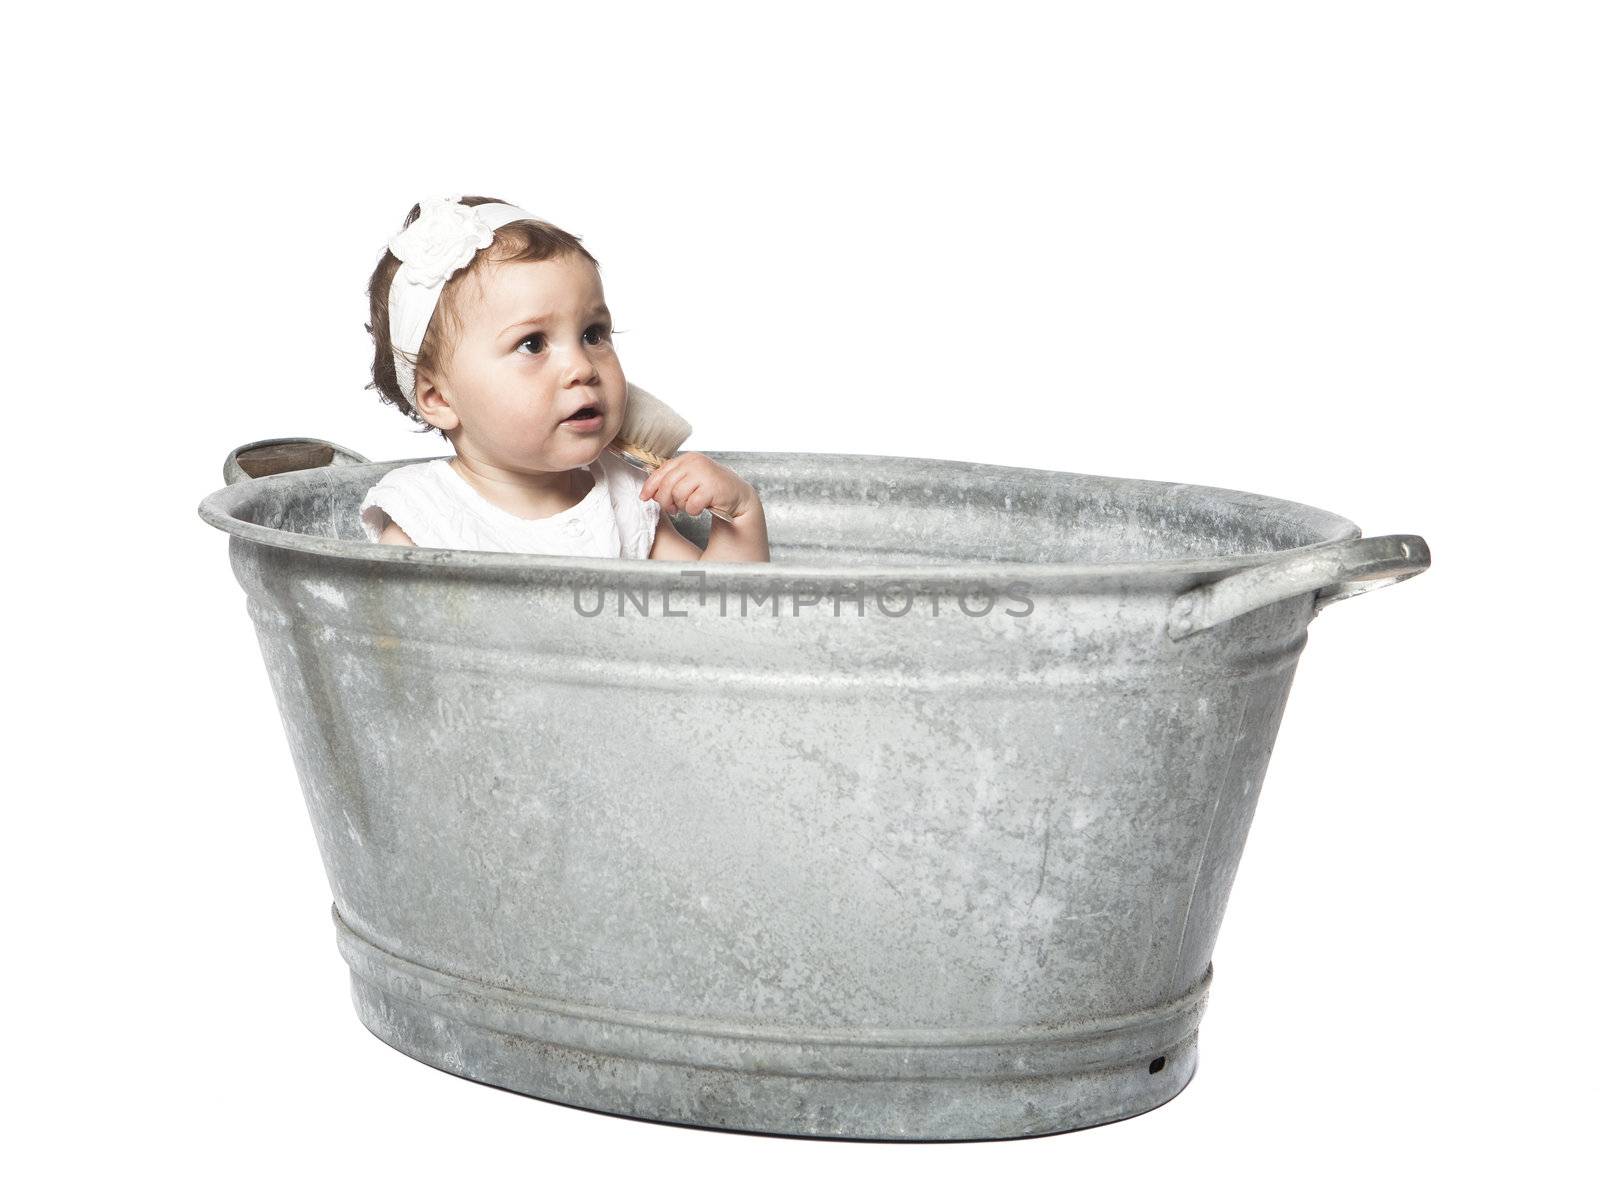 Baby in a bucket by gemenacom